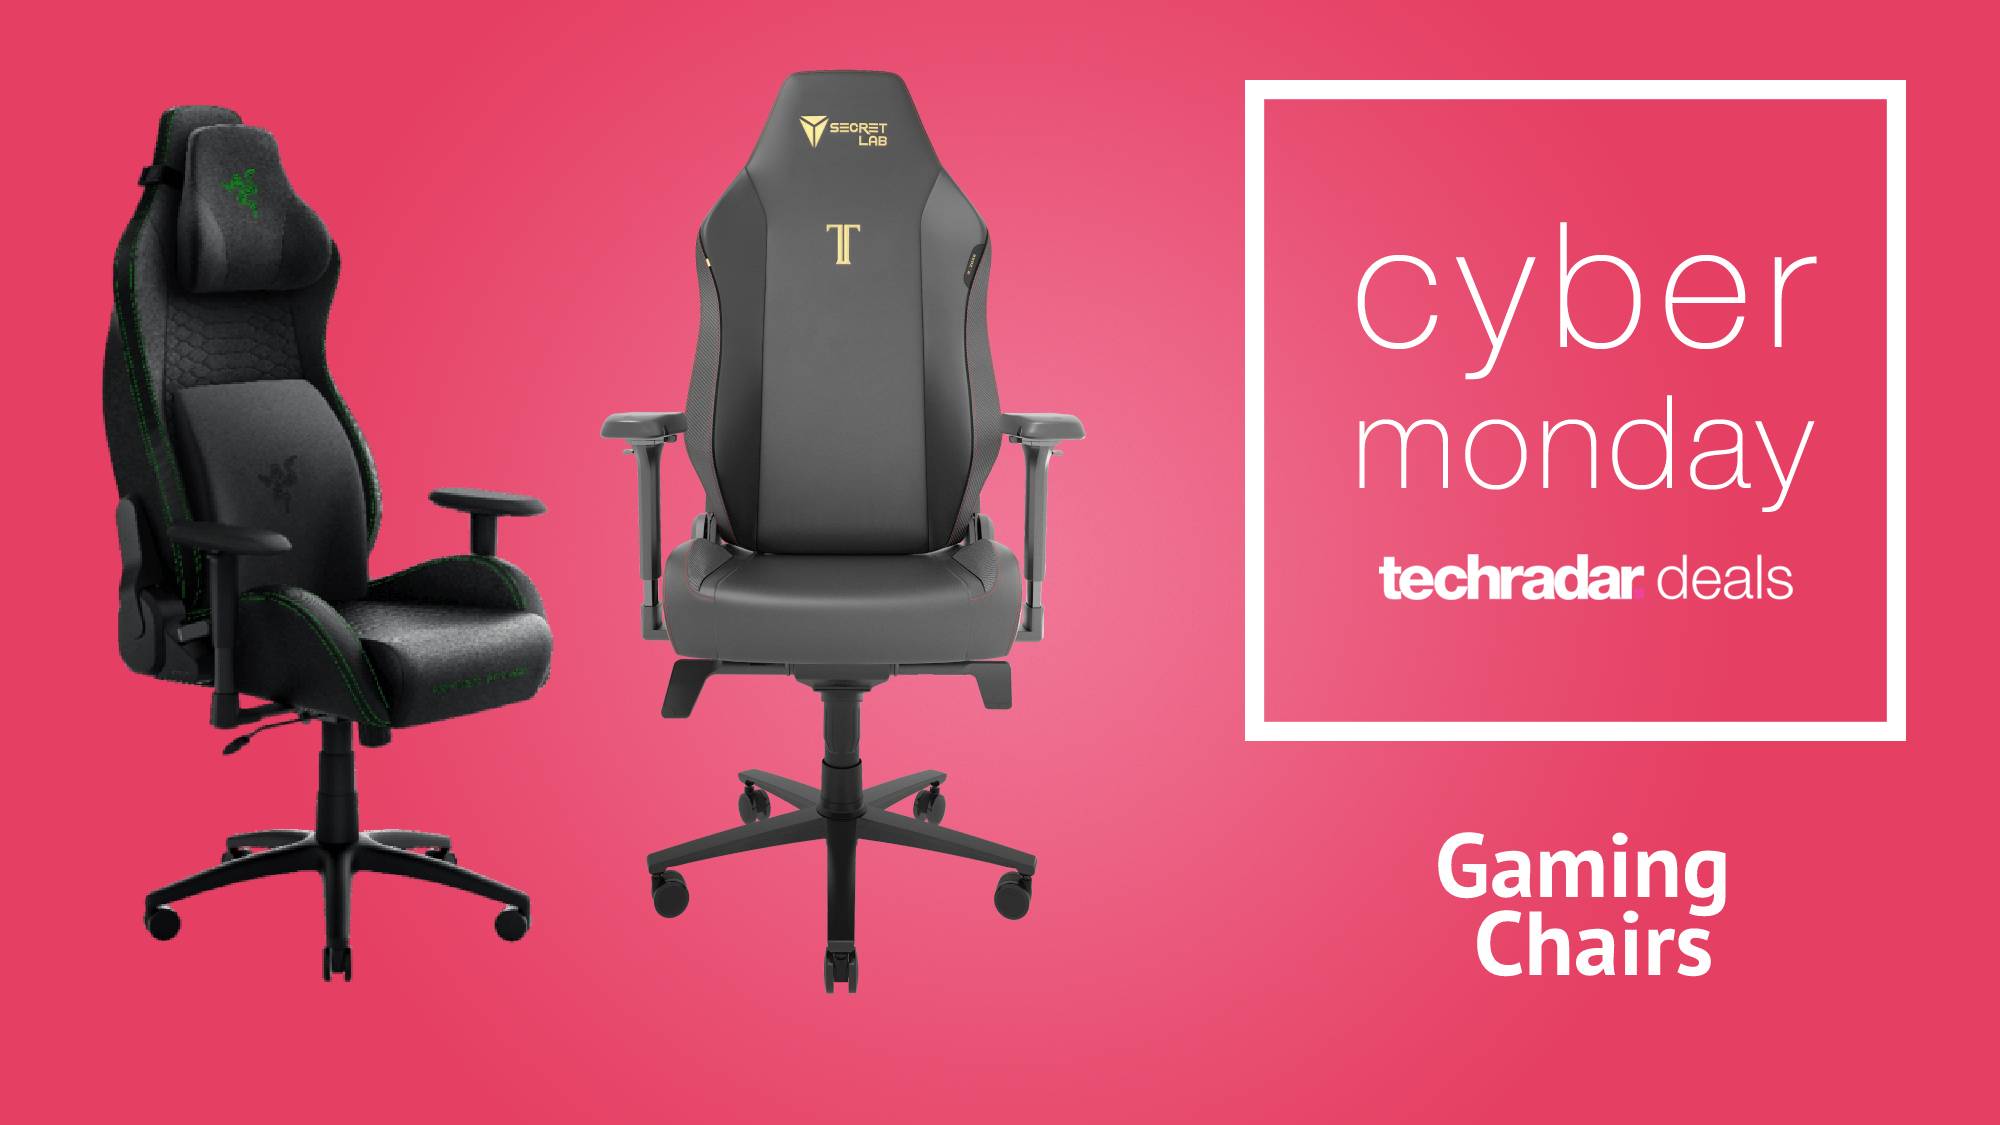 Cyber Monday gaming chair deals: A Razer Iskur and a SecretLab Titan Evo